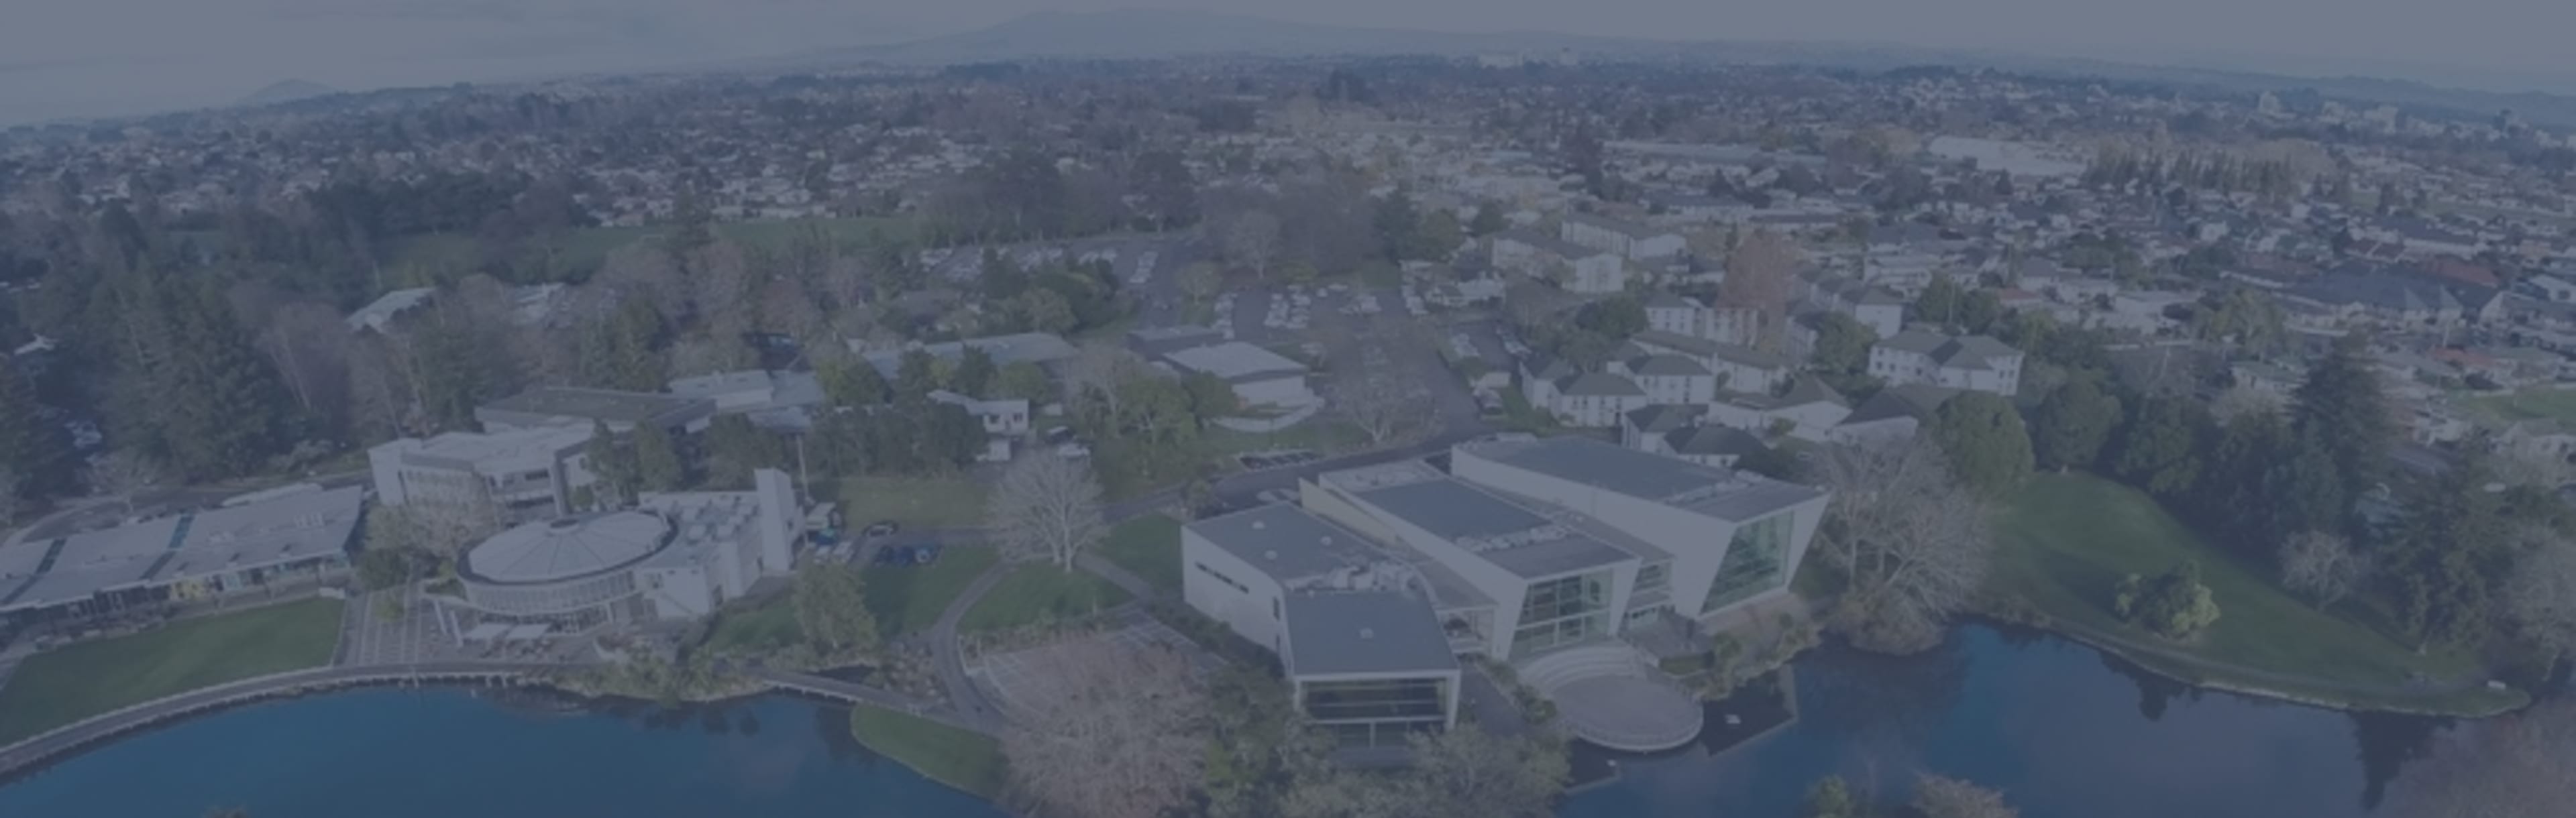 The University of Waikato ปริญญาโทบริหารธุรกิจ - MBA